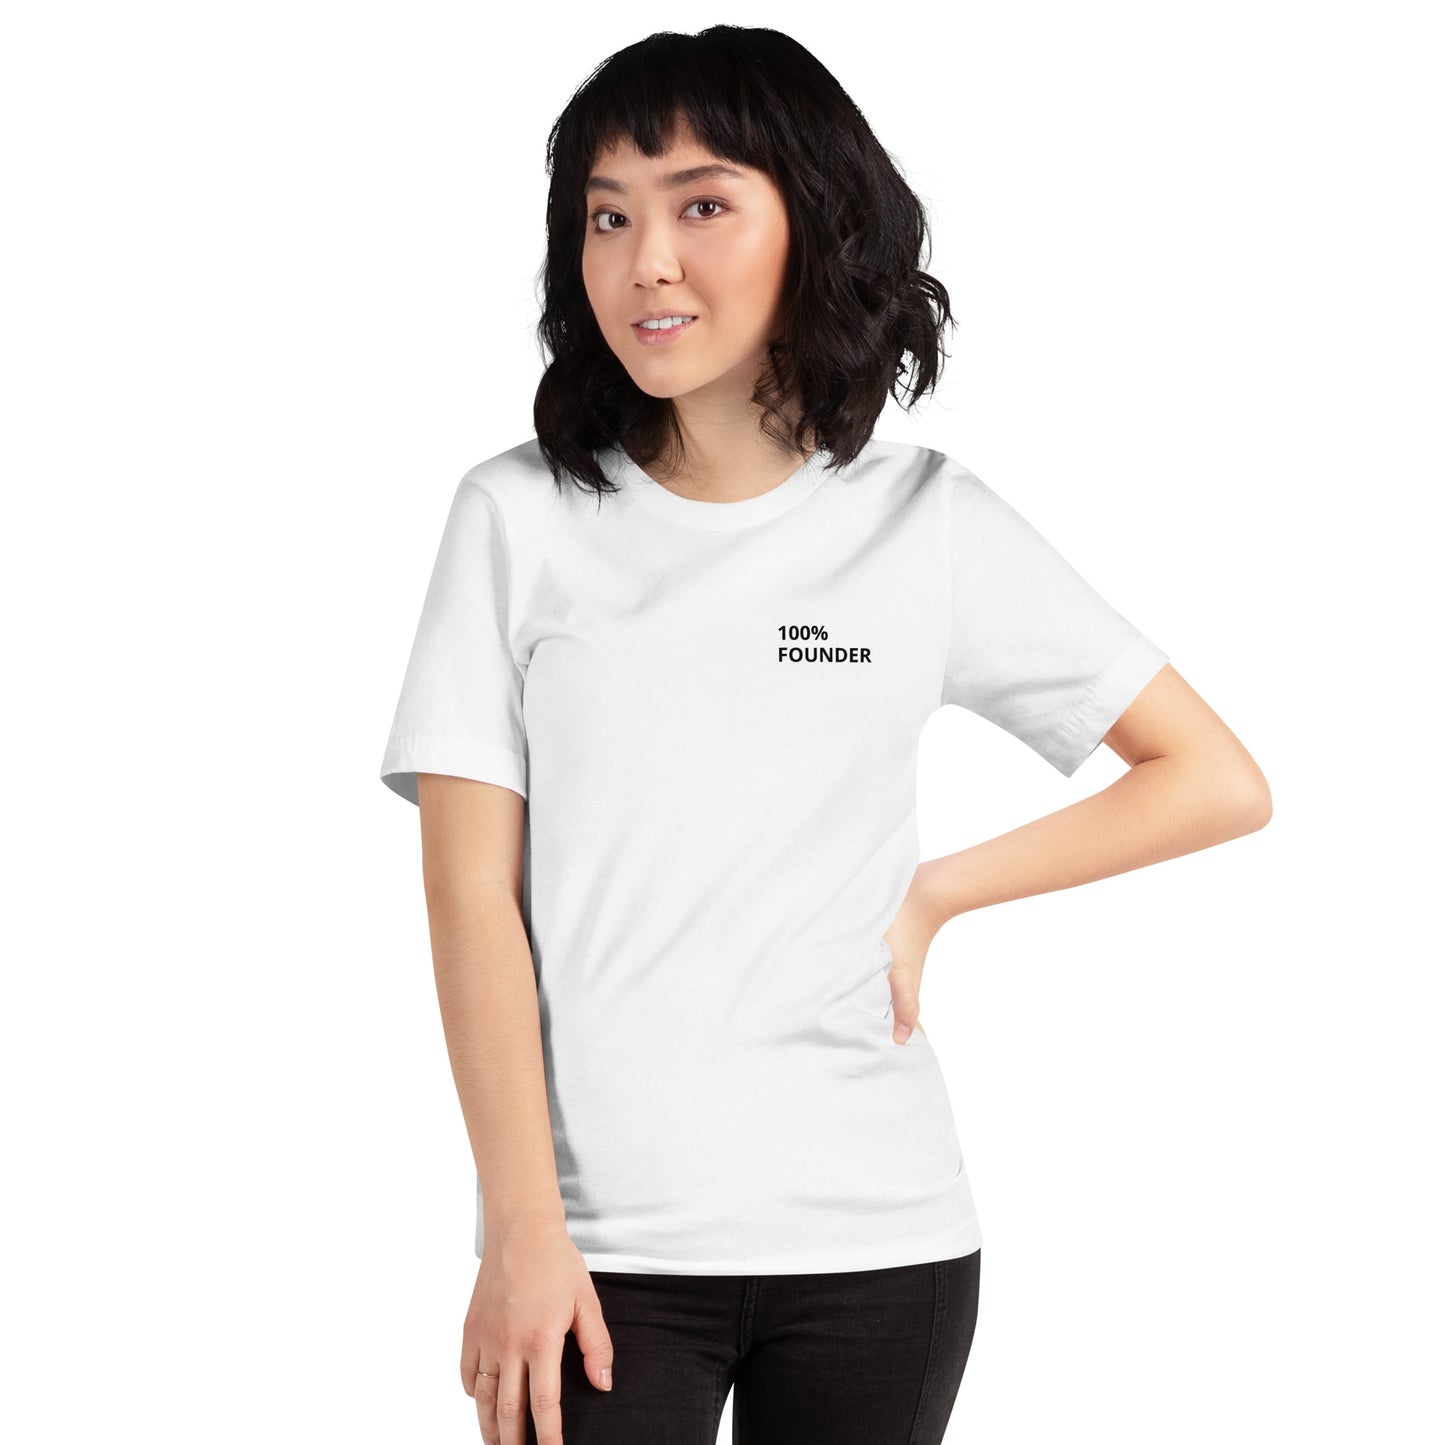 100% FOUNDER Unisex T-Shirt